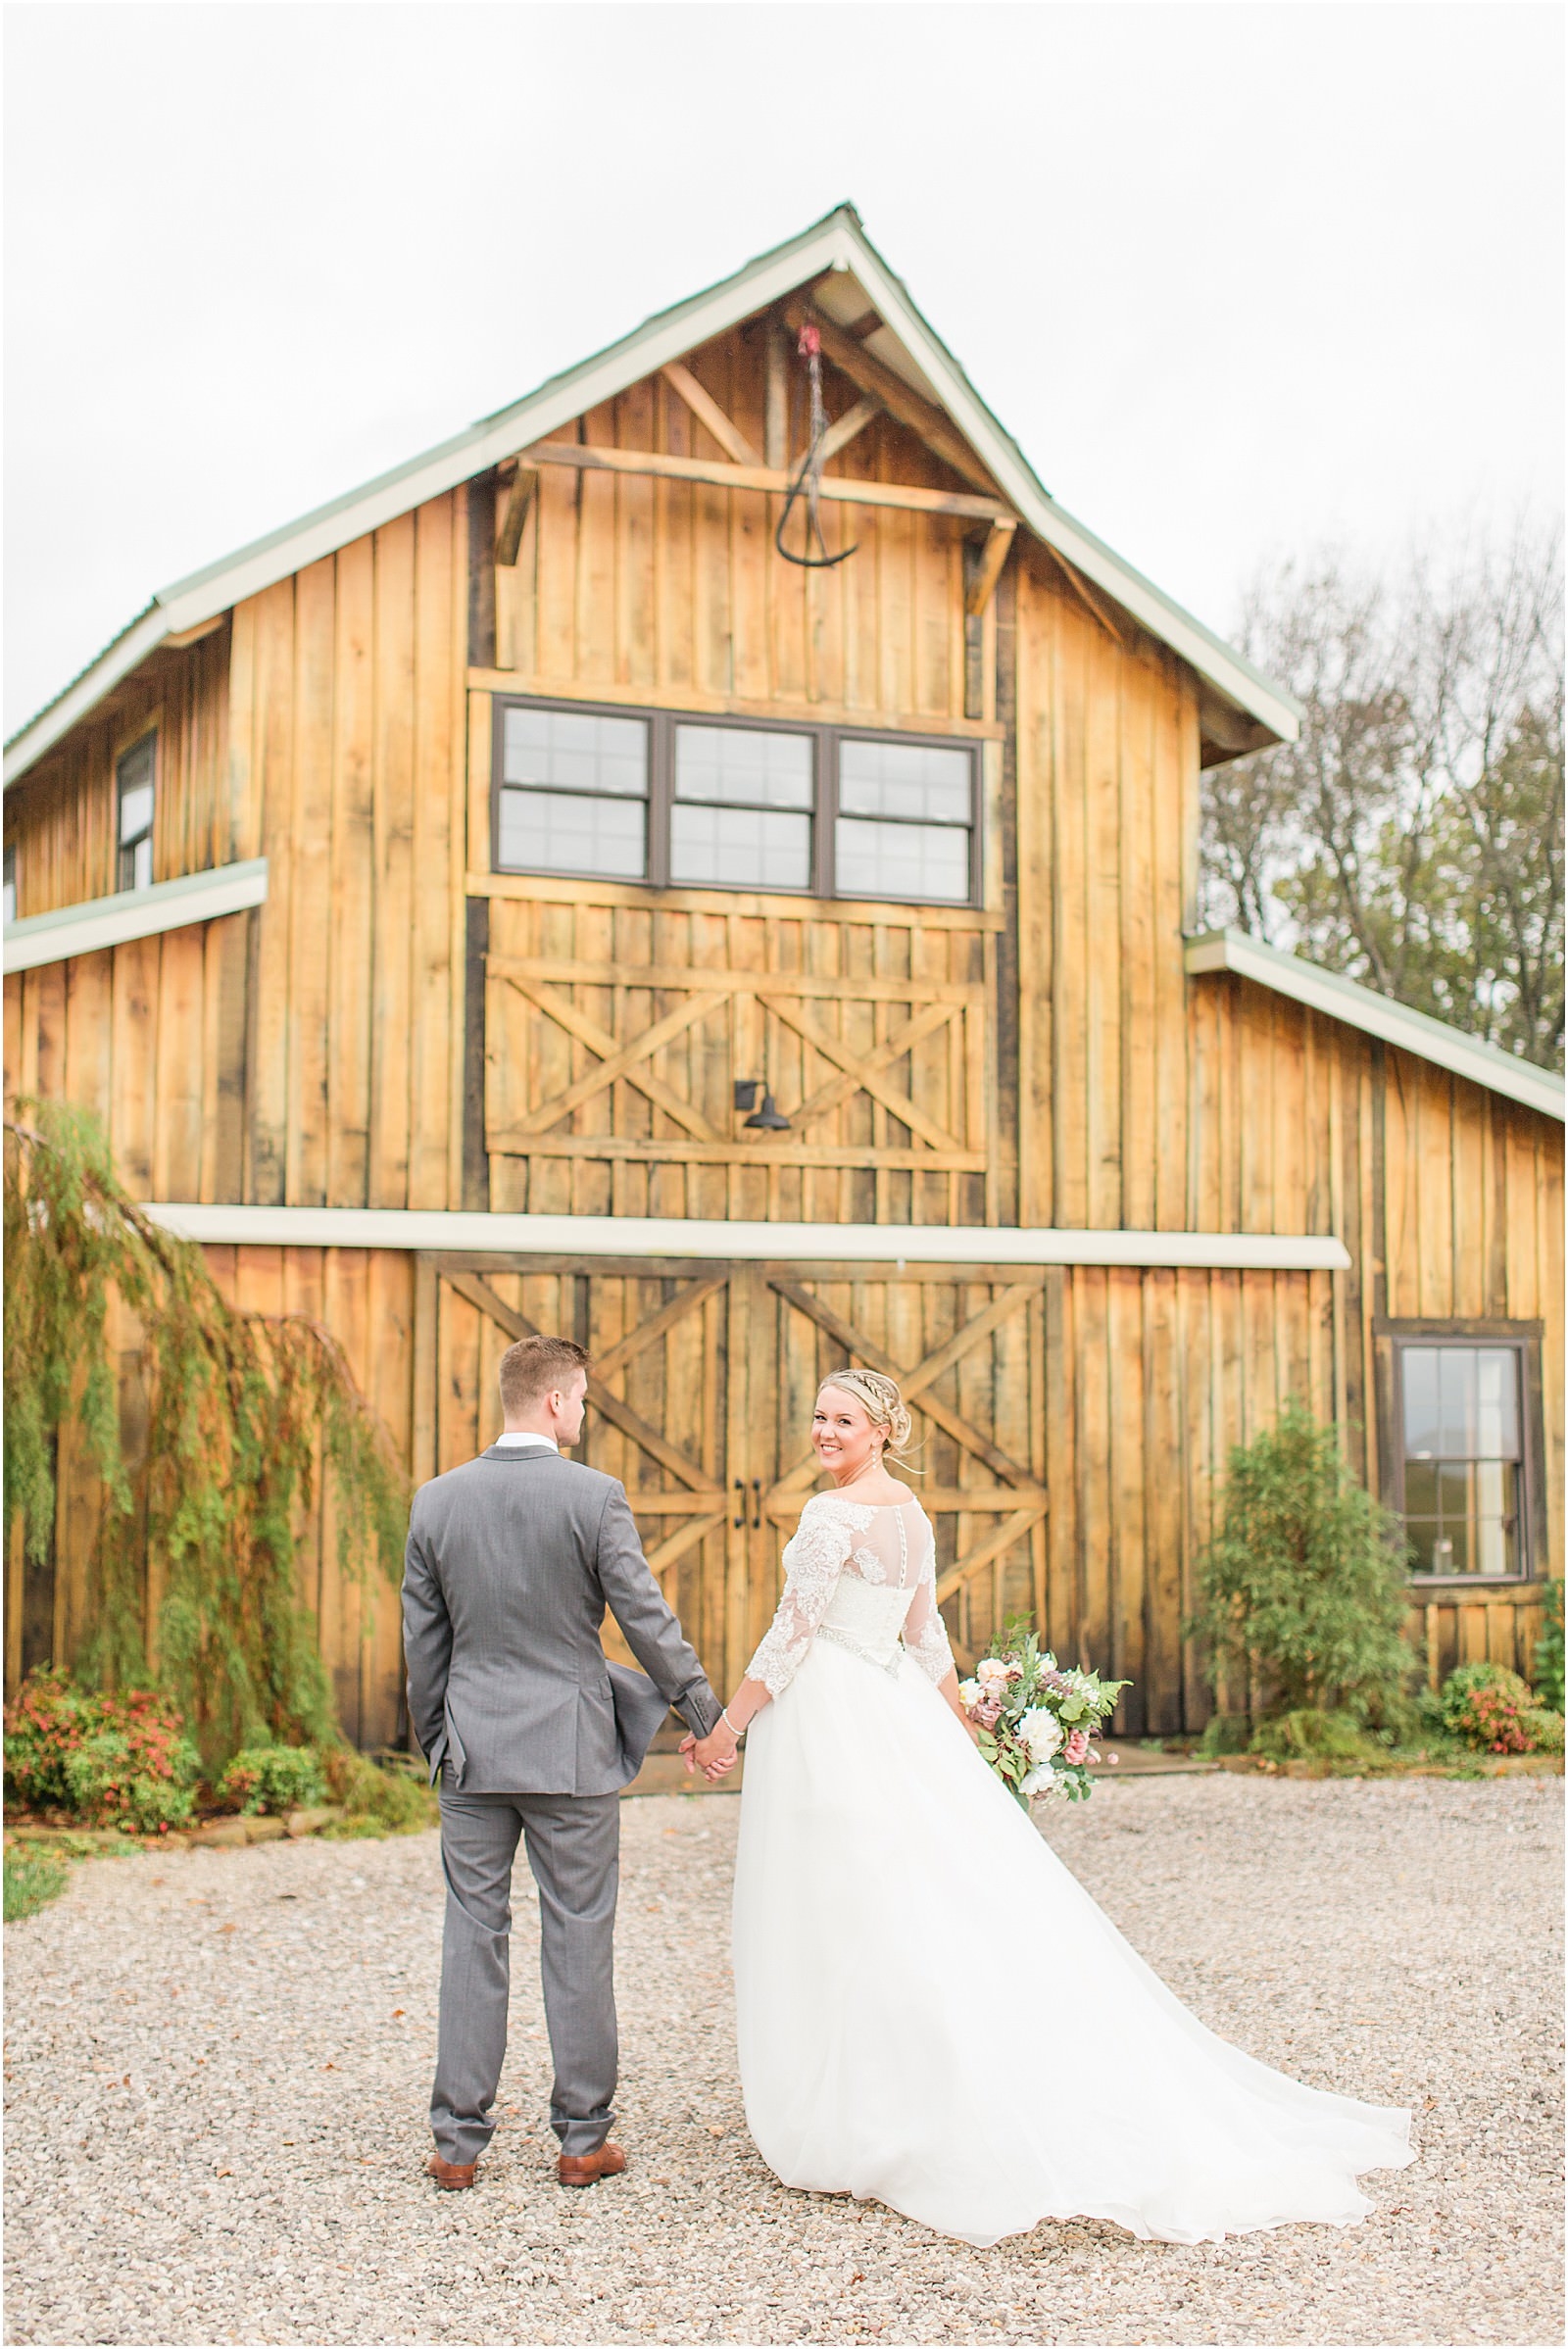 A Rainy Corner House Wedding | Rachel and Nick | Bret and Brandie Photography 0051.jpg